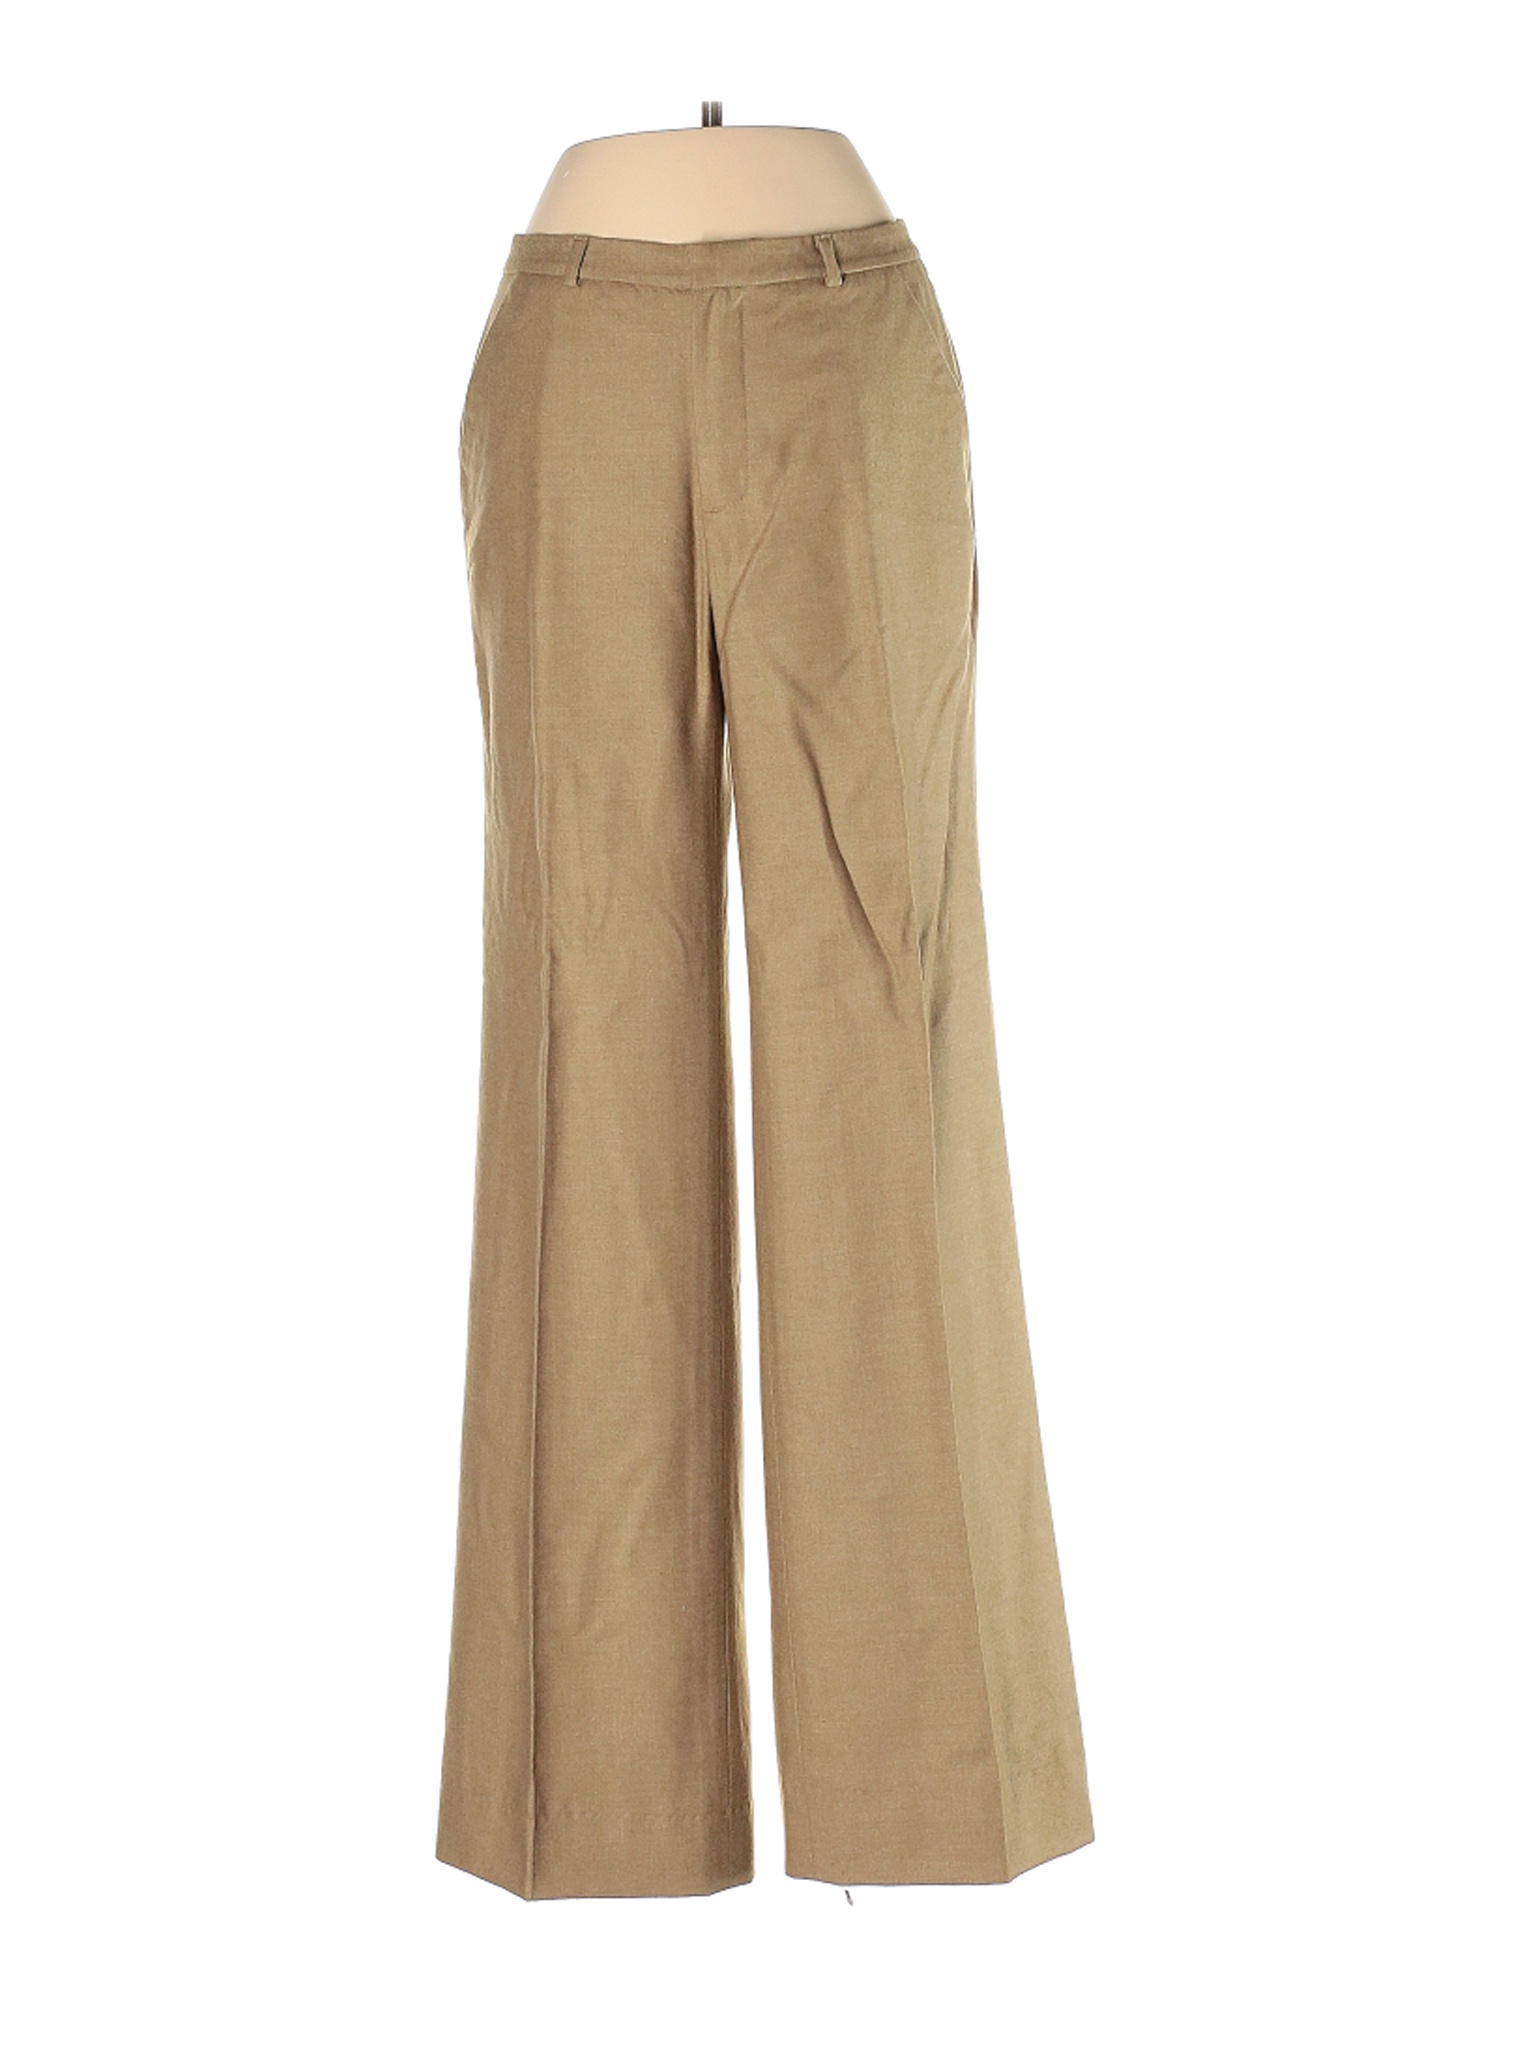 Banana Republic Women Brown Wool Pants 0 | eBay